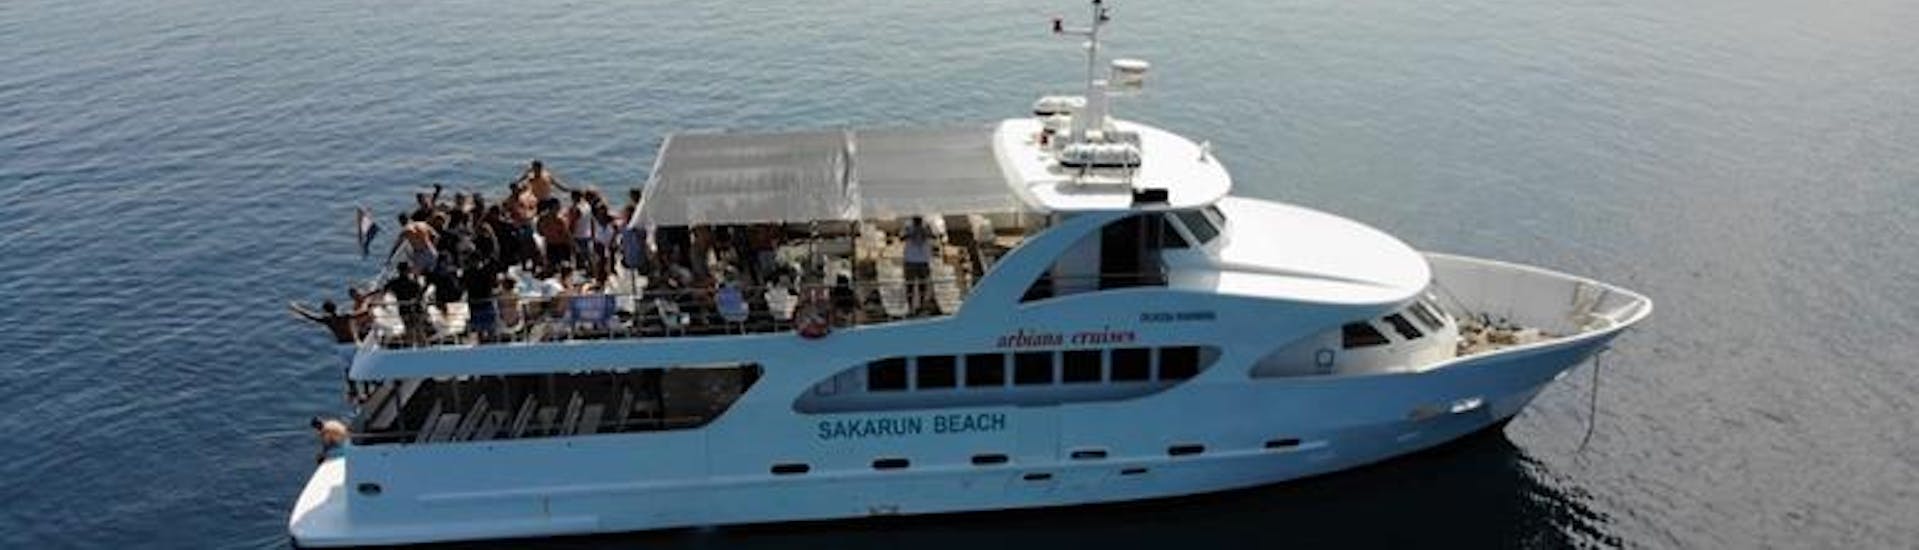 Gita in barca da Zara (Zadar) a Beach Sakarun con bagno in mare e osservazione della fauna selvatica.